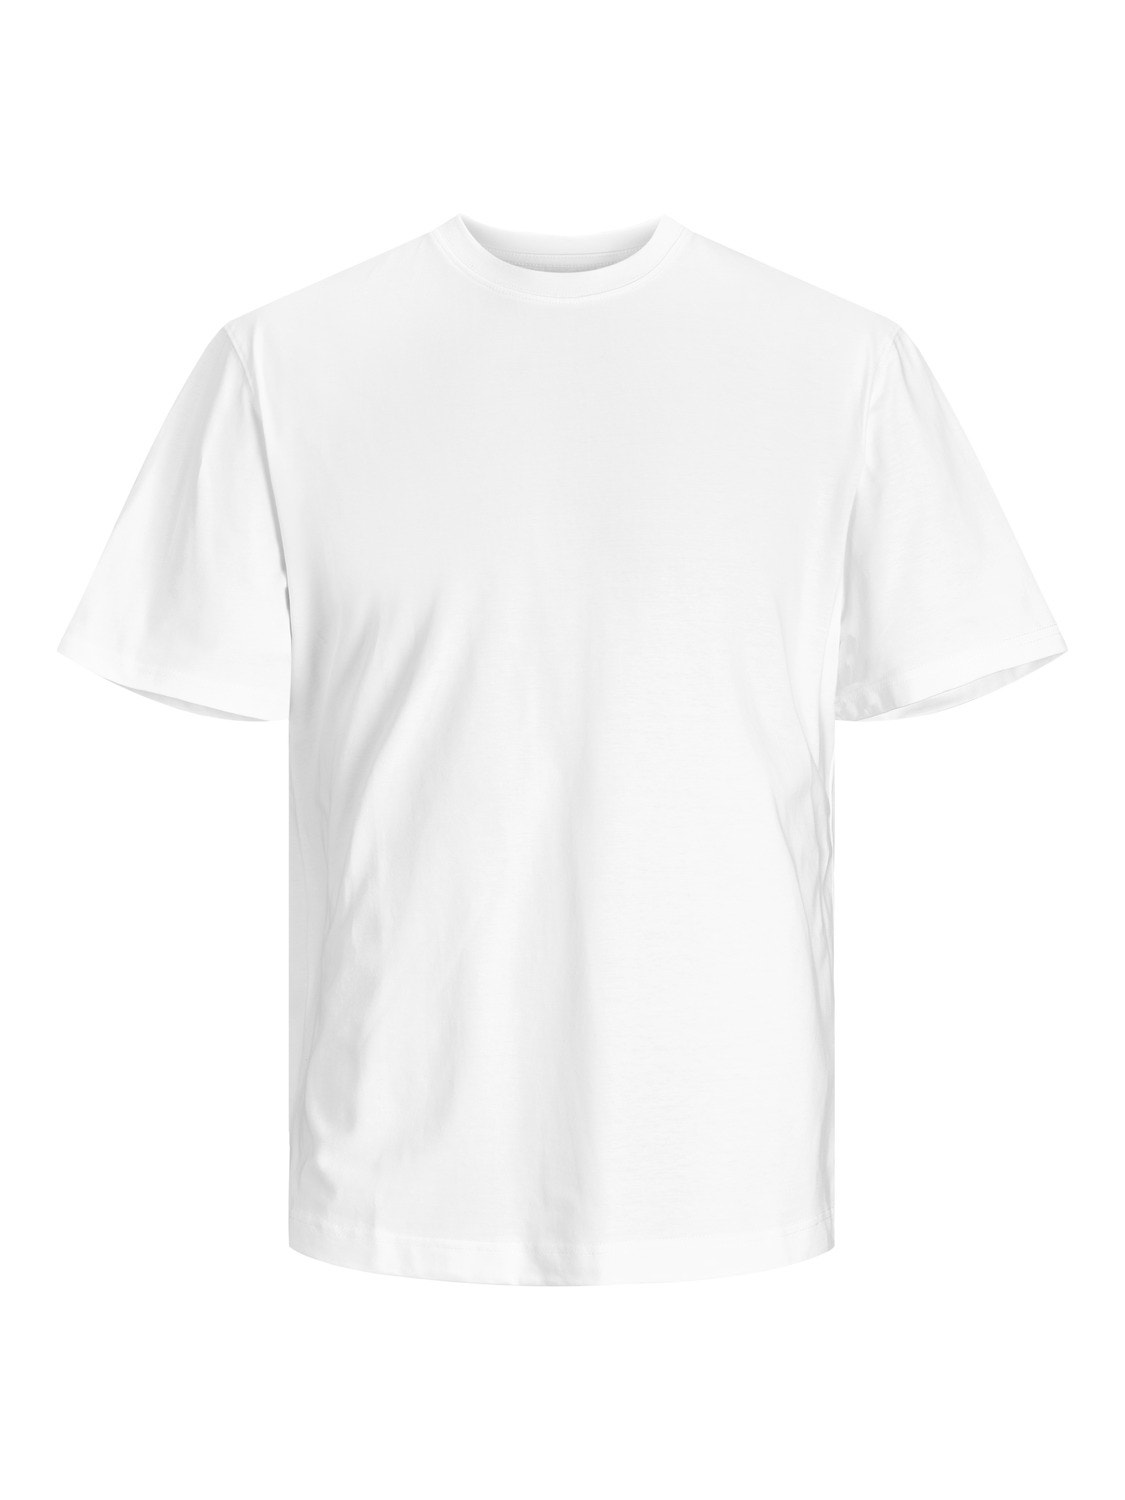 Jack Jones® neck | White & | T-shirt Crew Plain